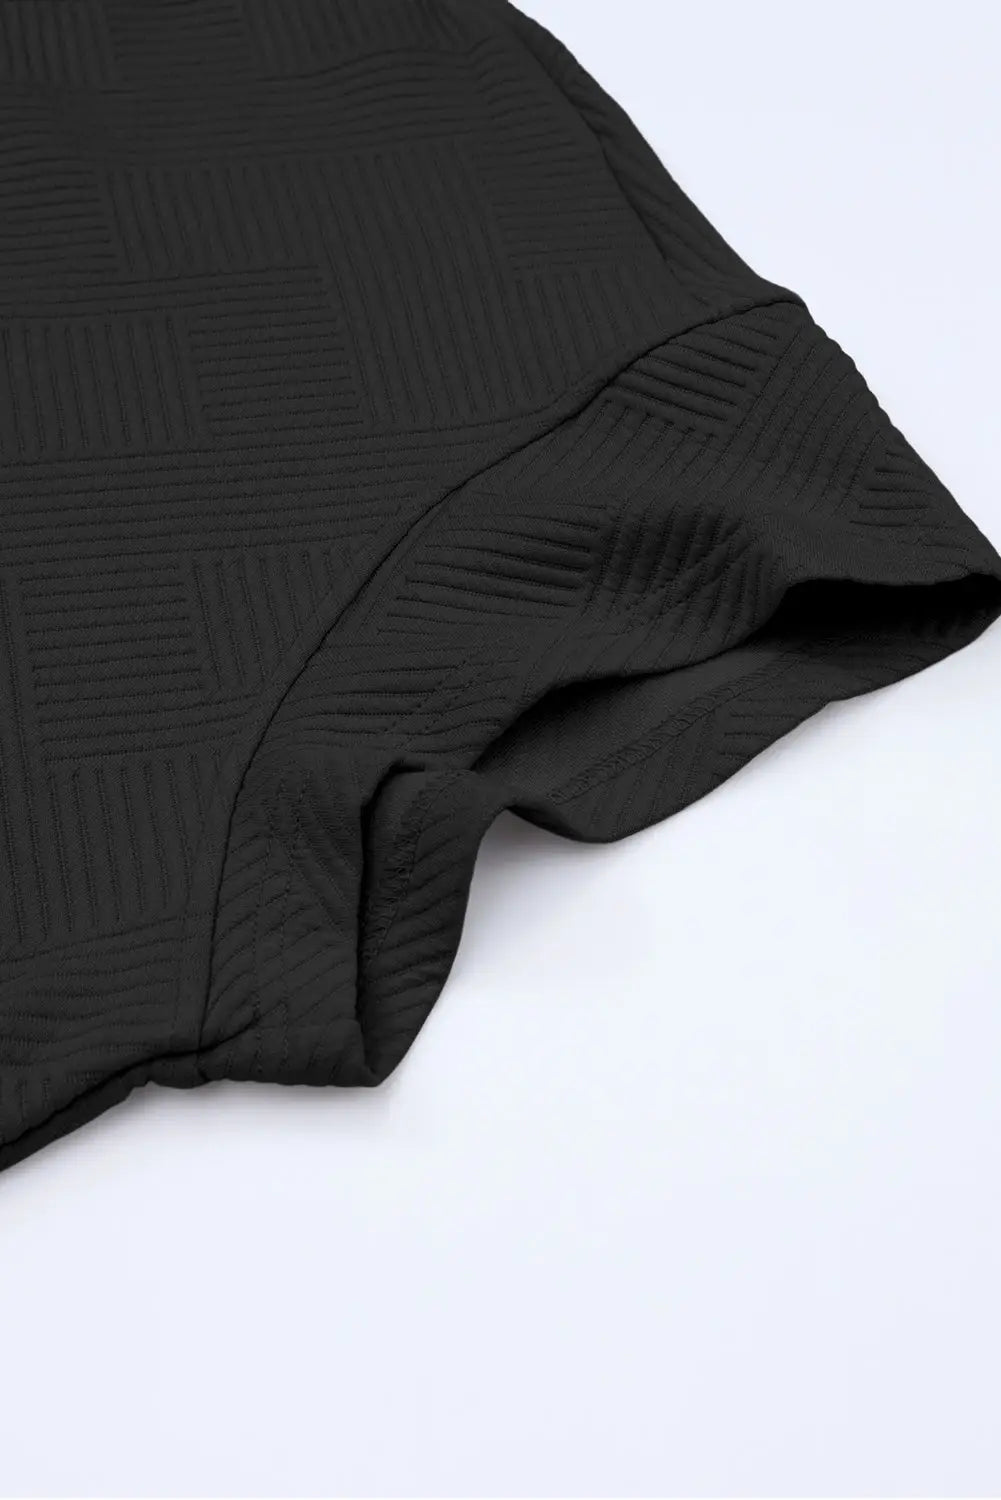 Black textured loose fit t shirt and drawstring pants set - loungewear